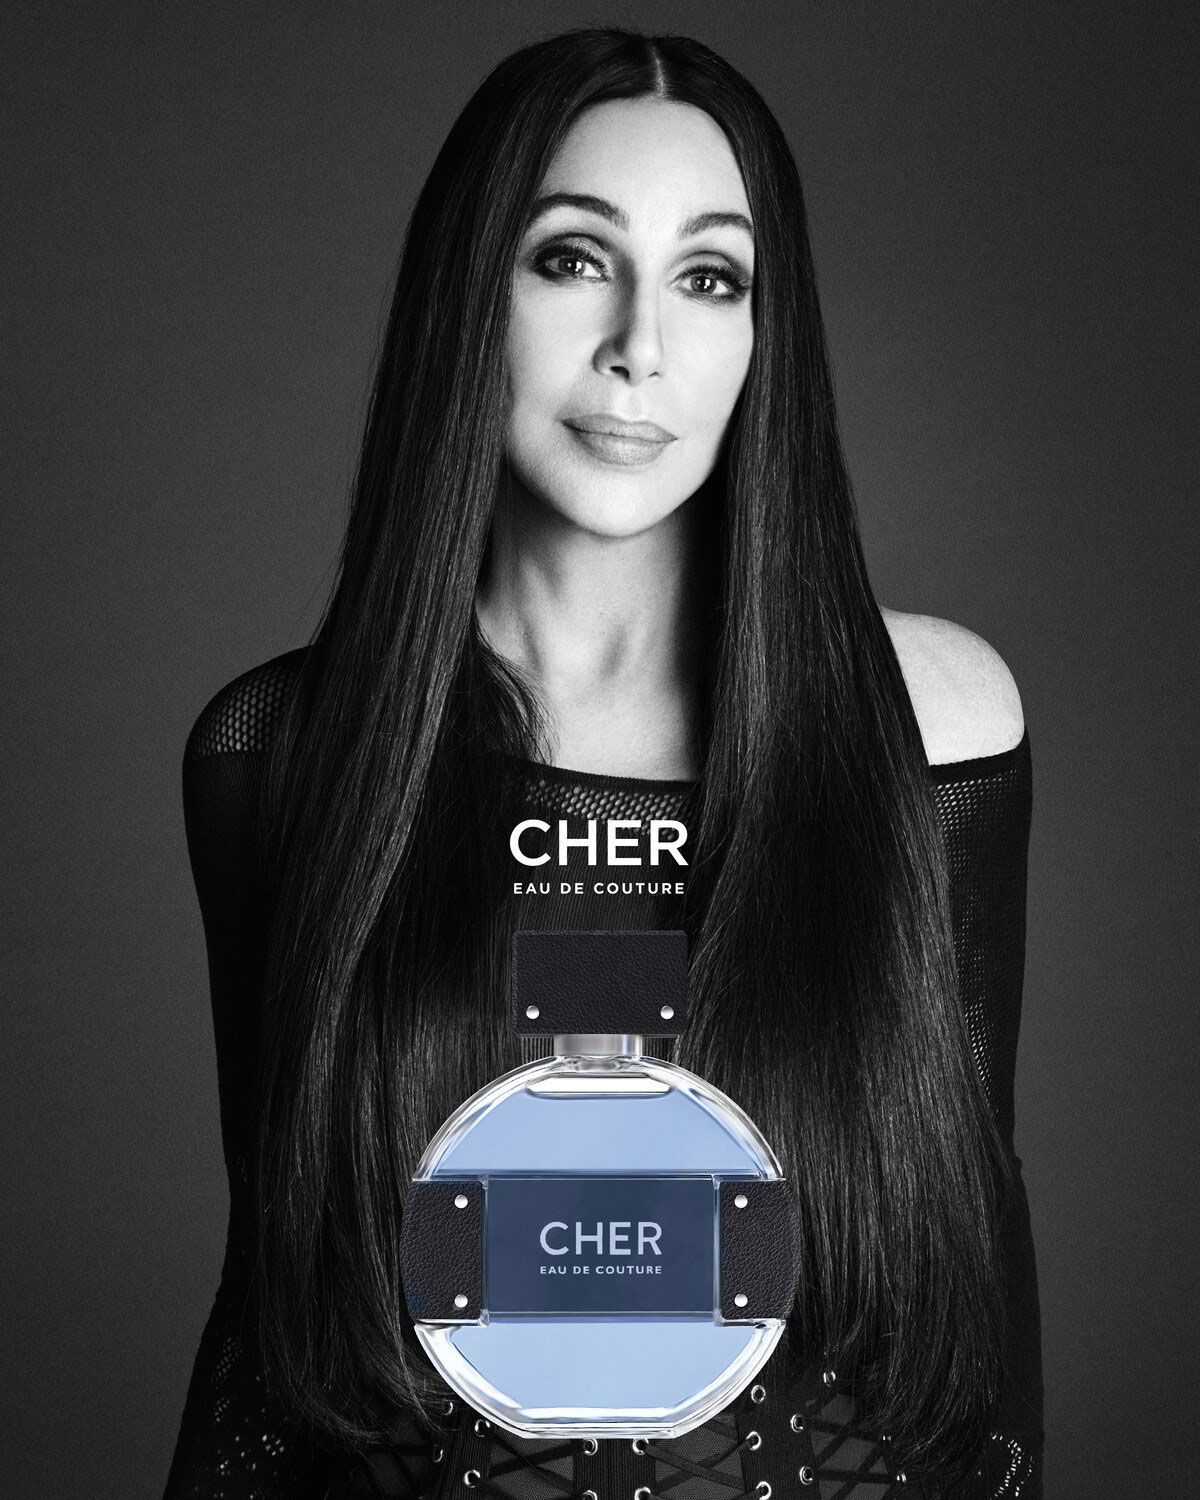 Cher Eau de Couture ad by Mert & Marcus, December 2019